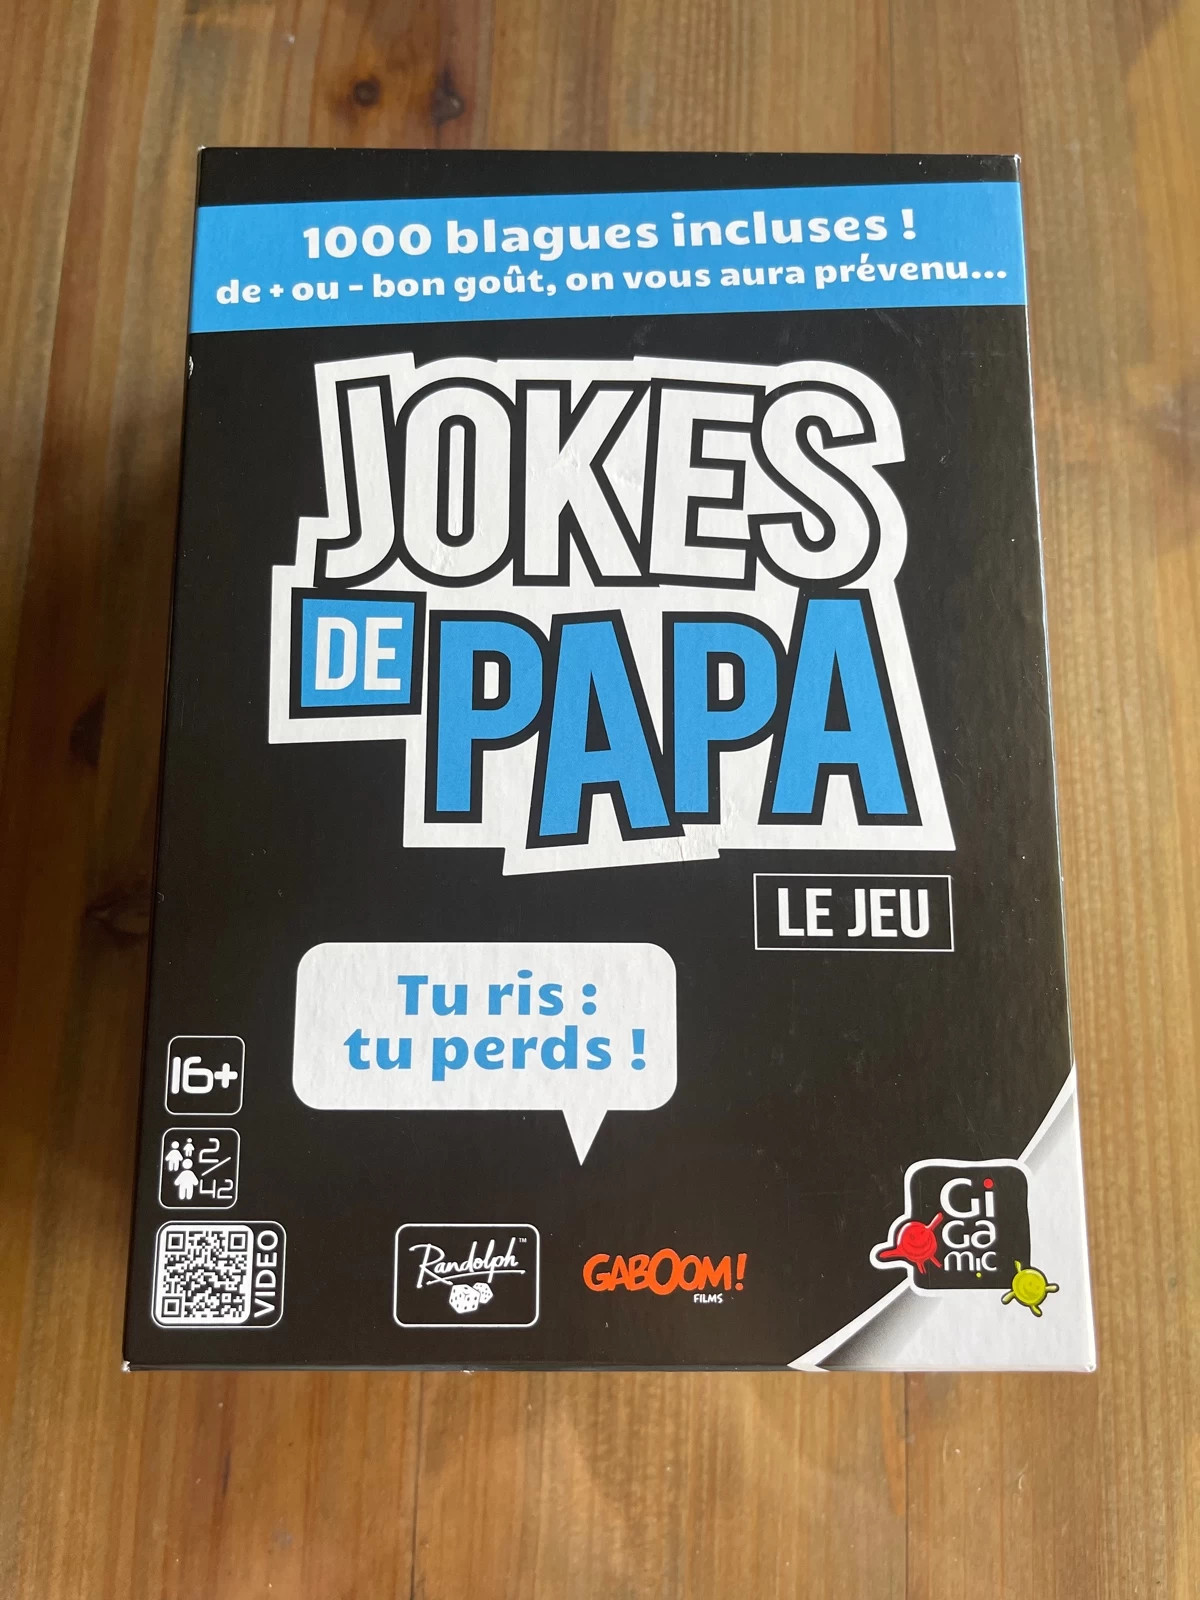 Gigamic - Jokes de papa